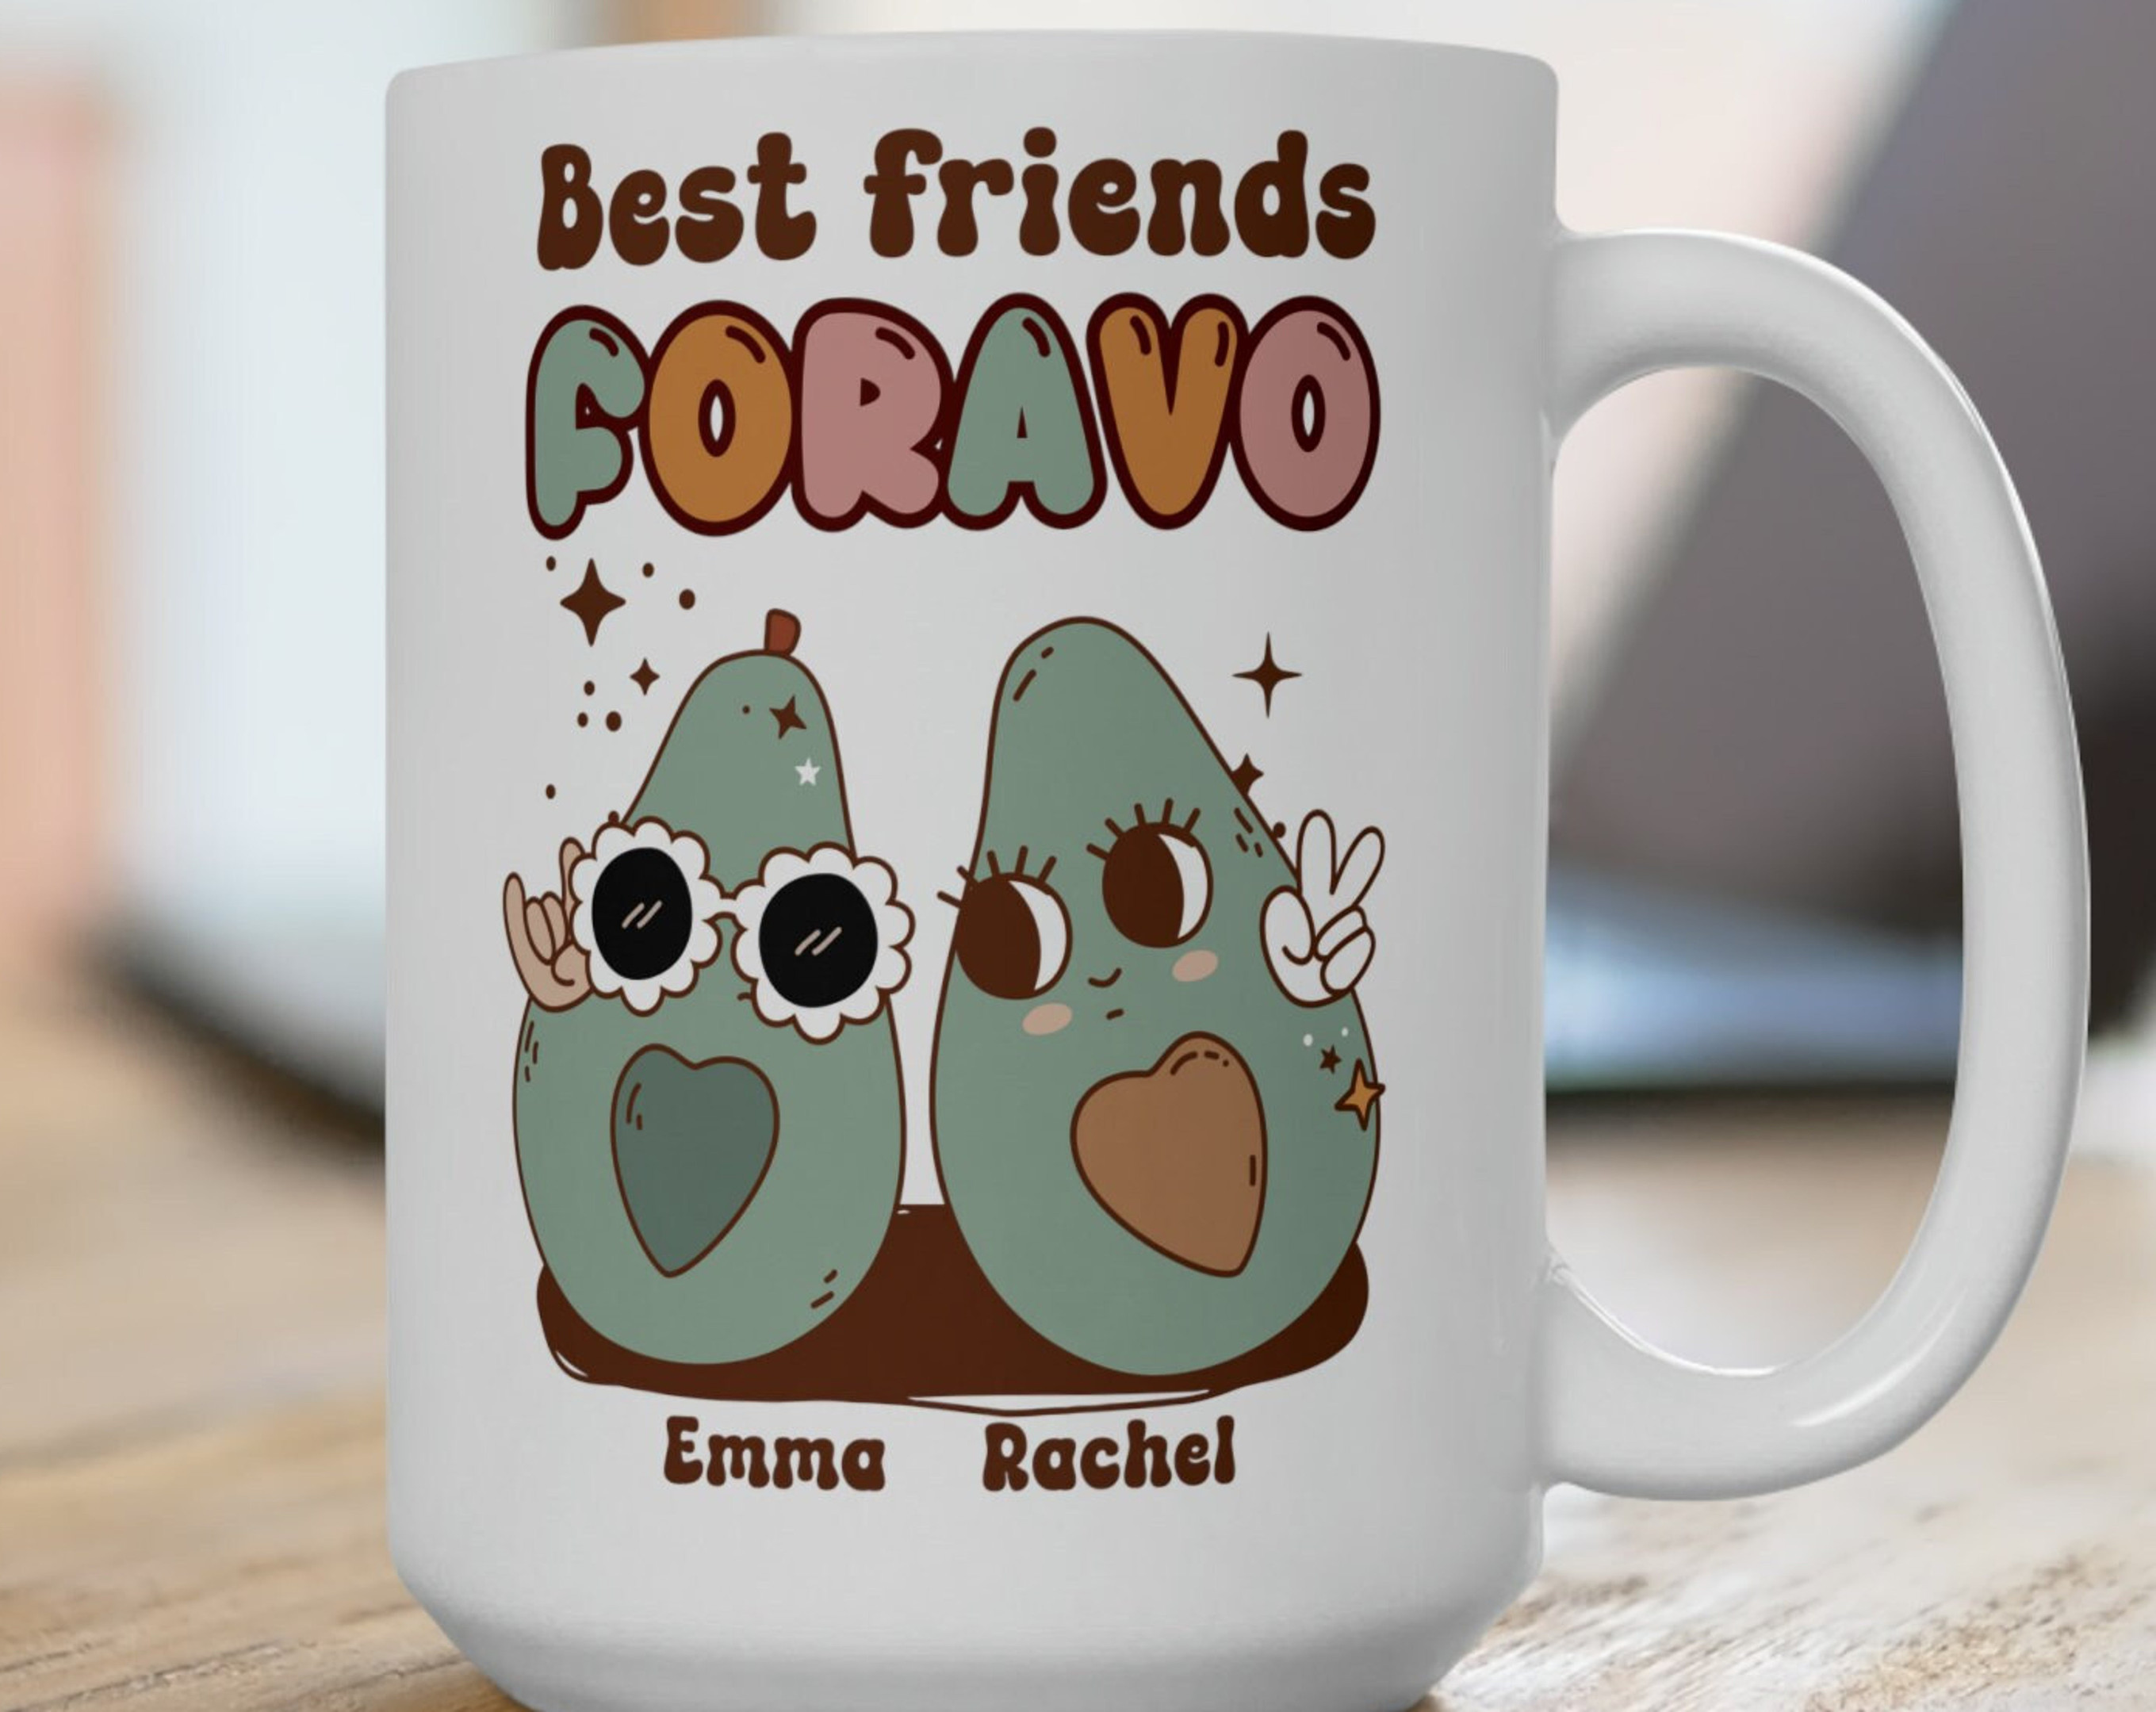 Custom Best Friend Mug, Bestie Personalized Mug, Avocado Lover, Best Friends Mug, Friend Mug, Friend Birthday present, Christmas Gift Mug